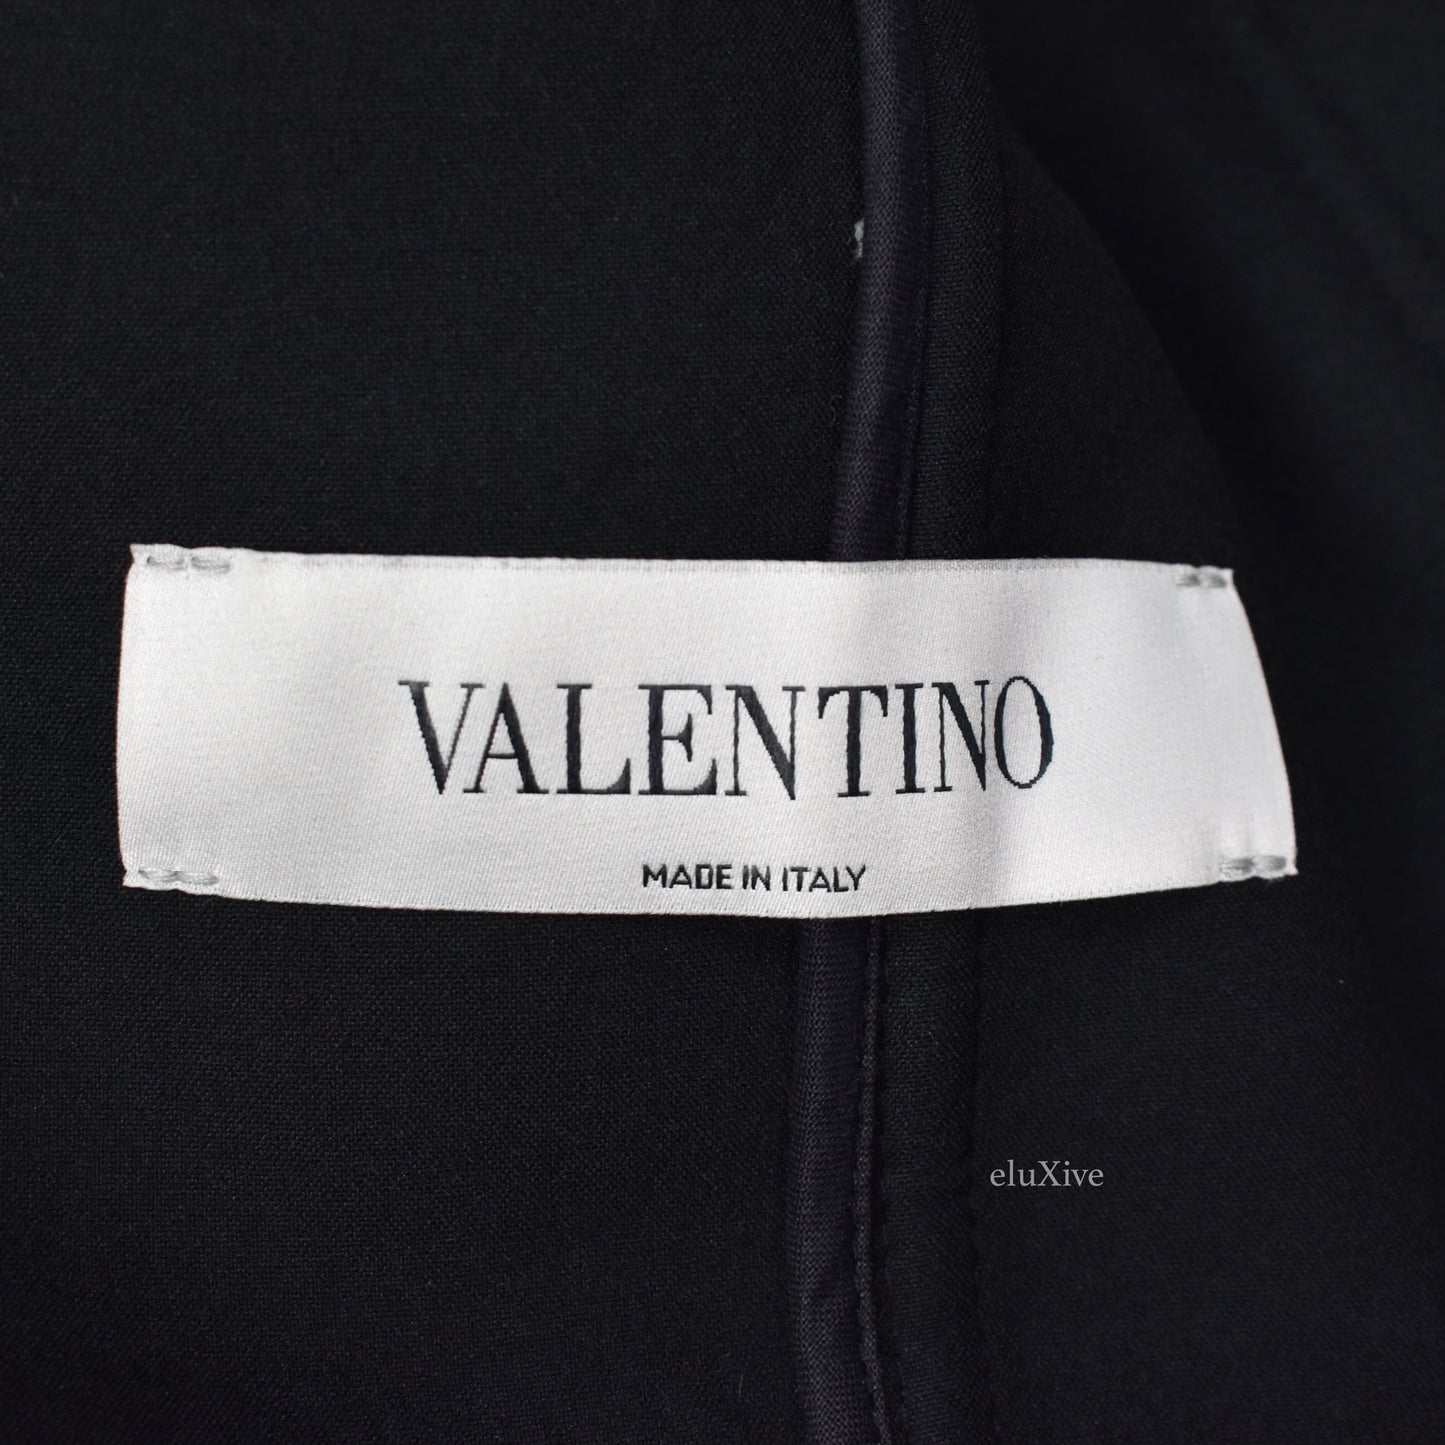 Valentino - Navajo Blanket Woven Jacket